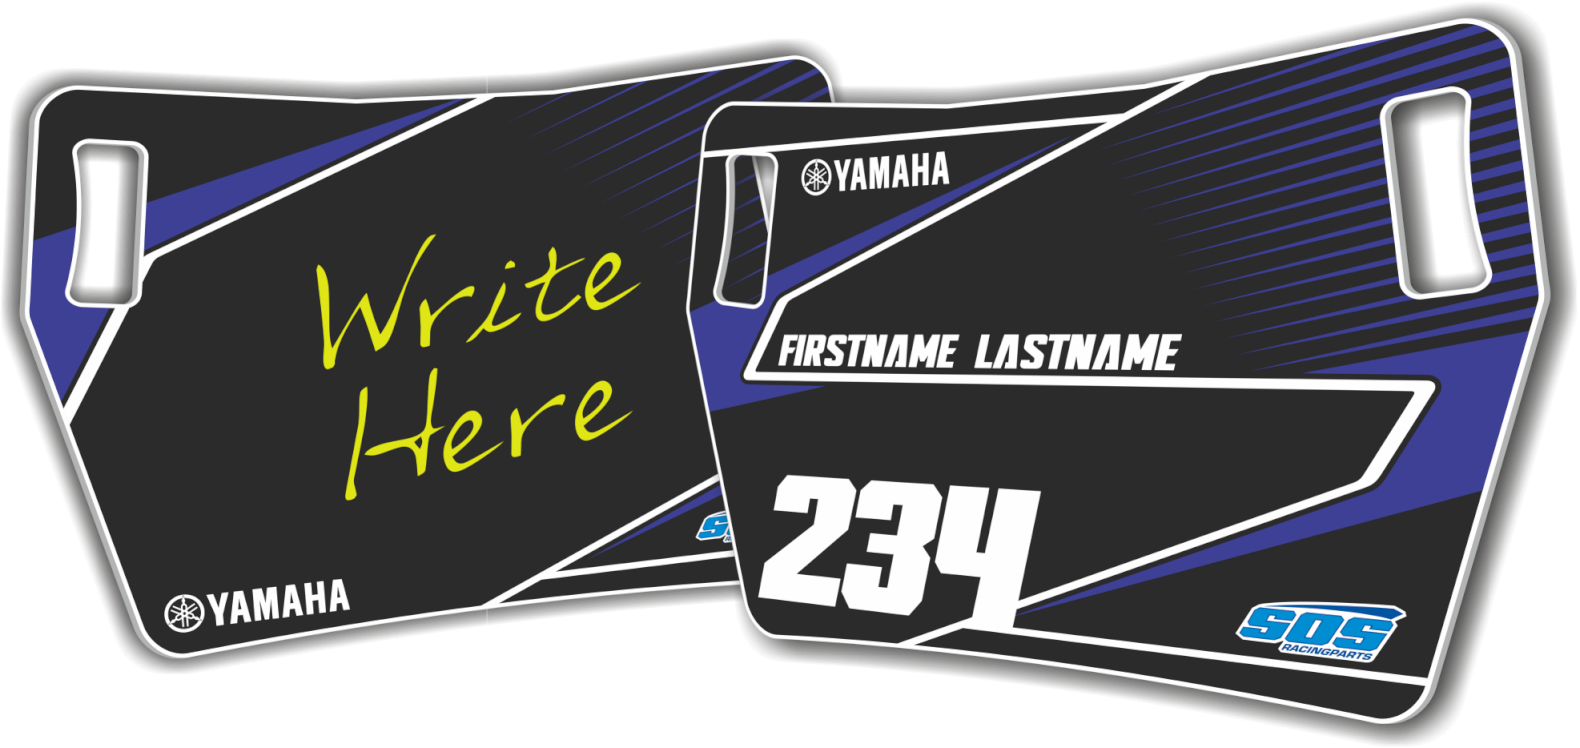 Race 6 Yamaha Pitboard